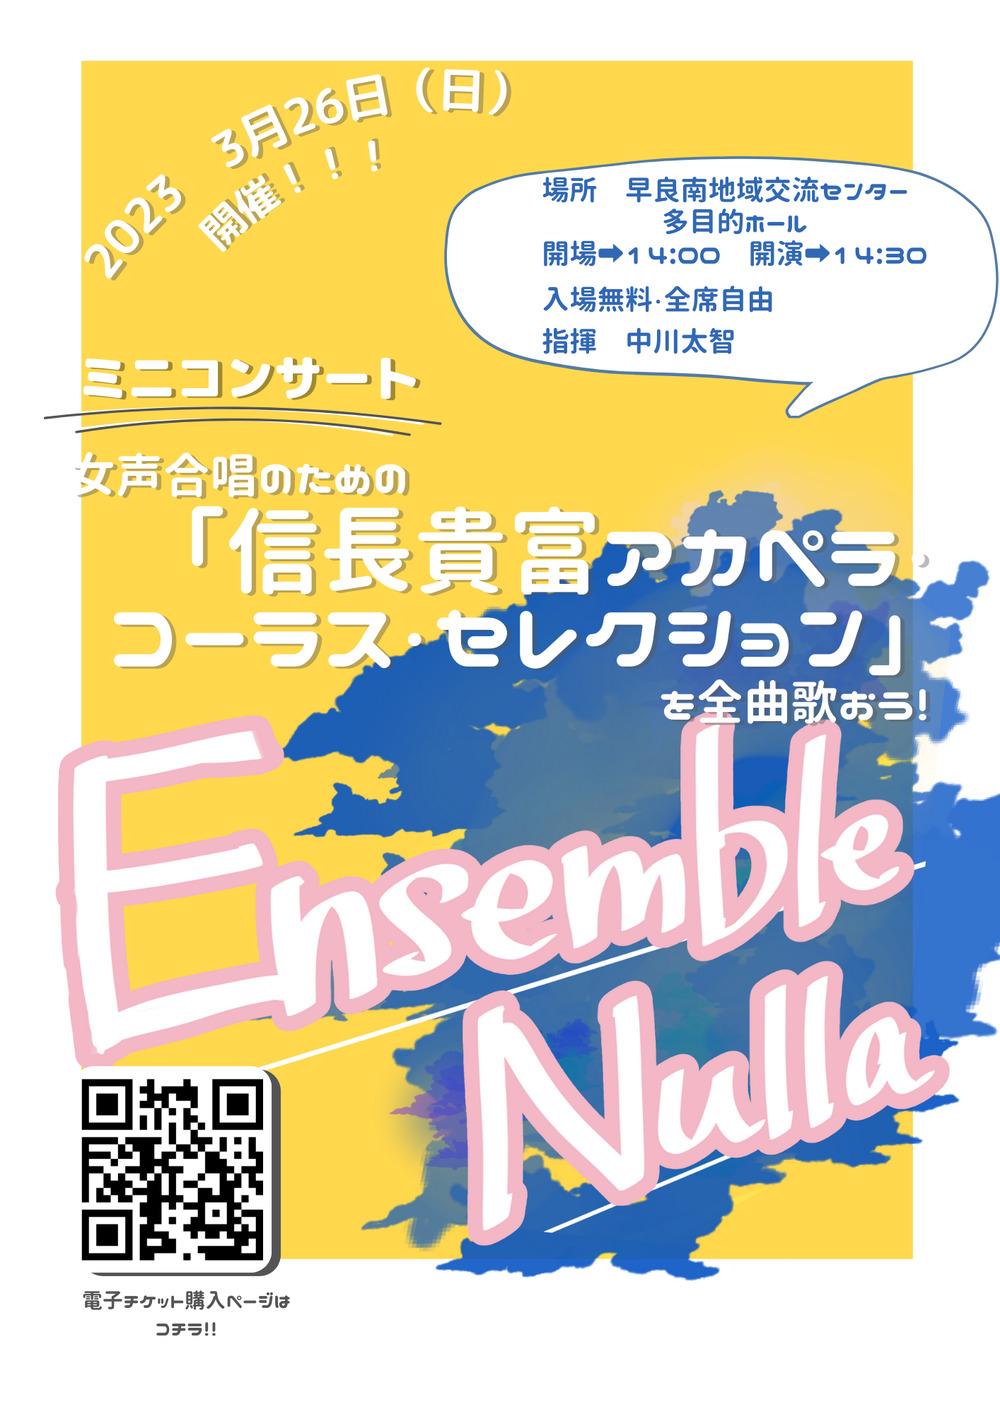 Ensemble Nulla ミニコンサート【Ensemble Nulla】 | 早良南地域交流